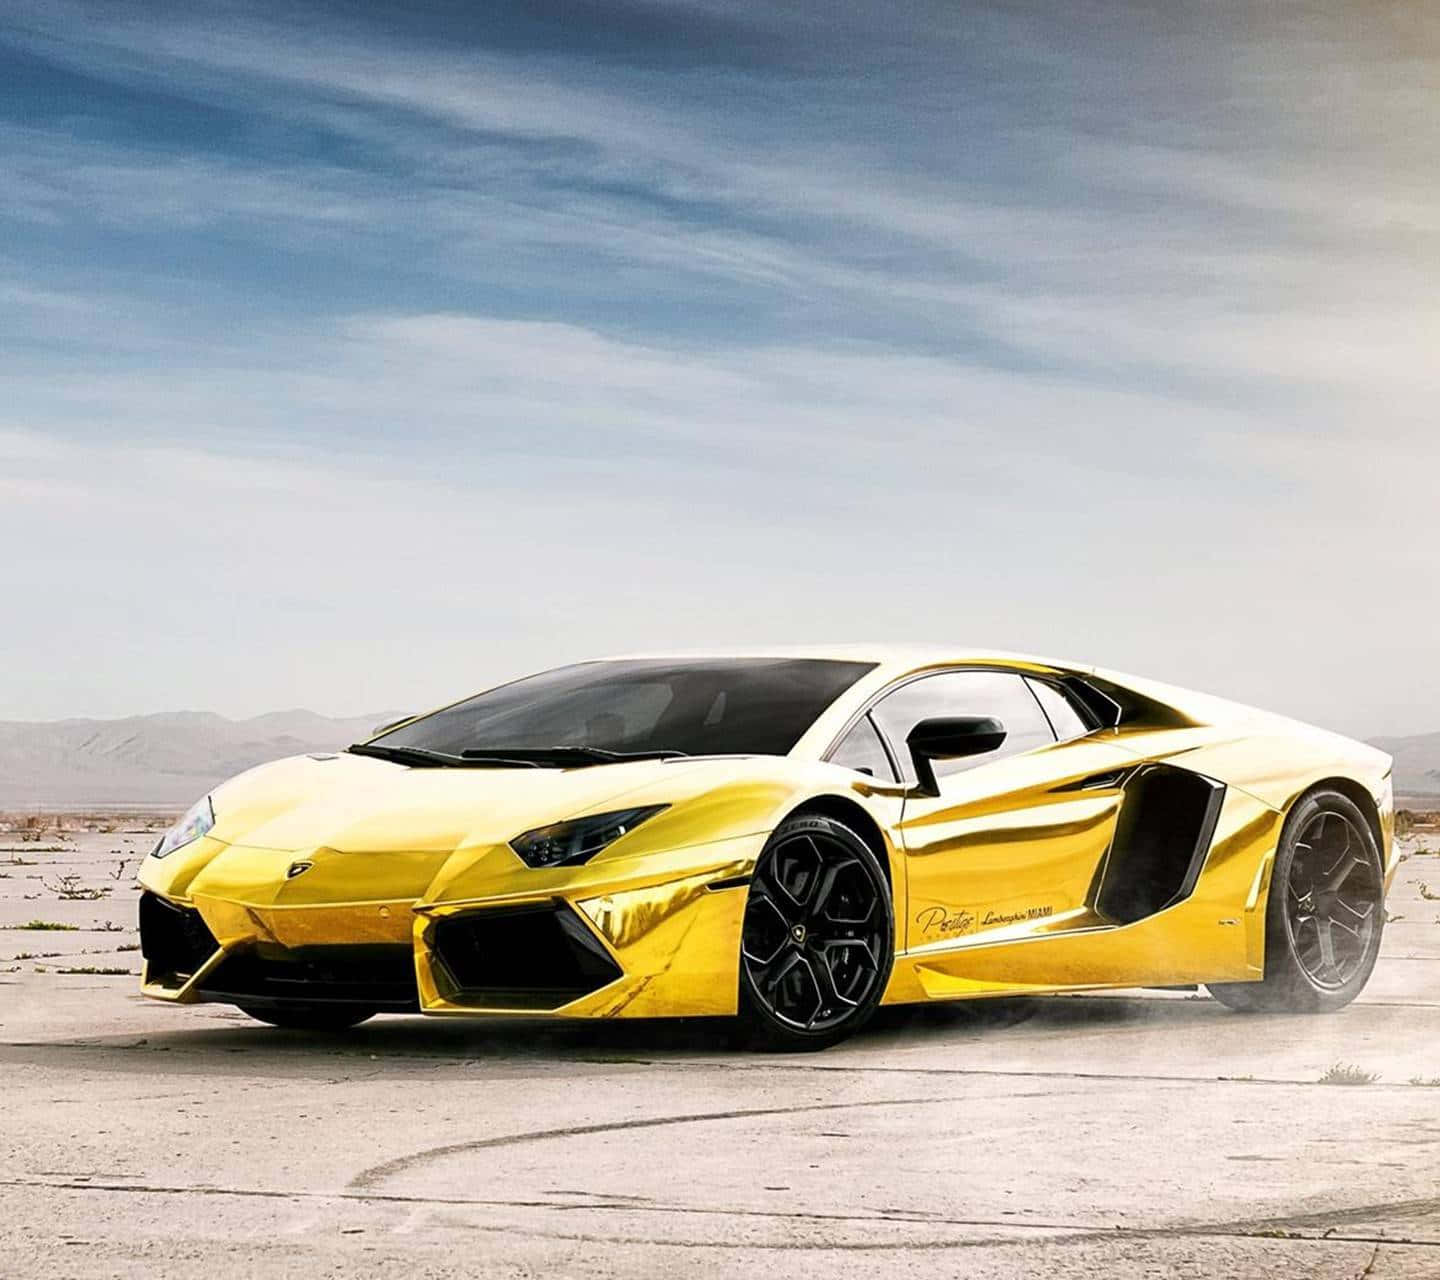 Eingoldener Lamborghini Strahlt Auf Der Straße Wallpaper